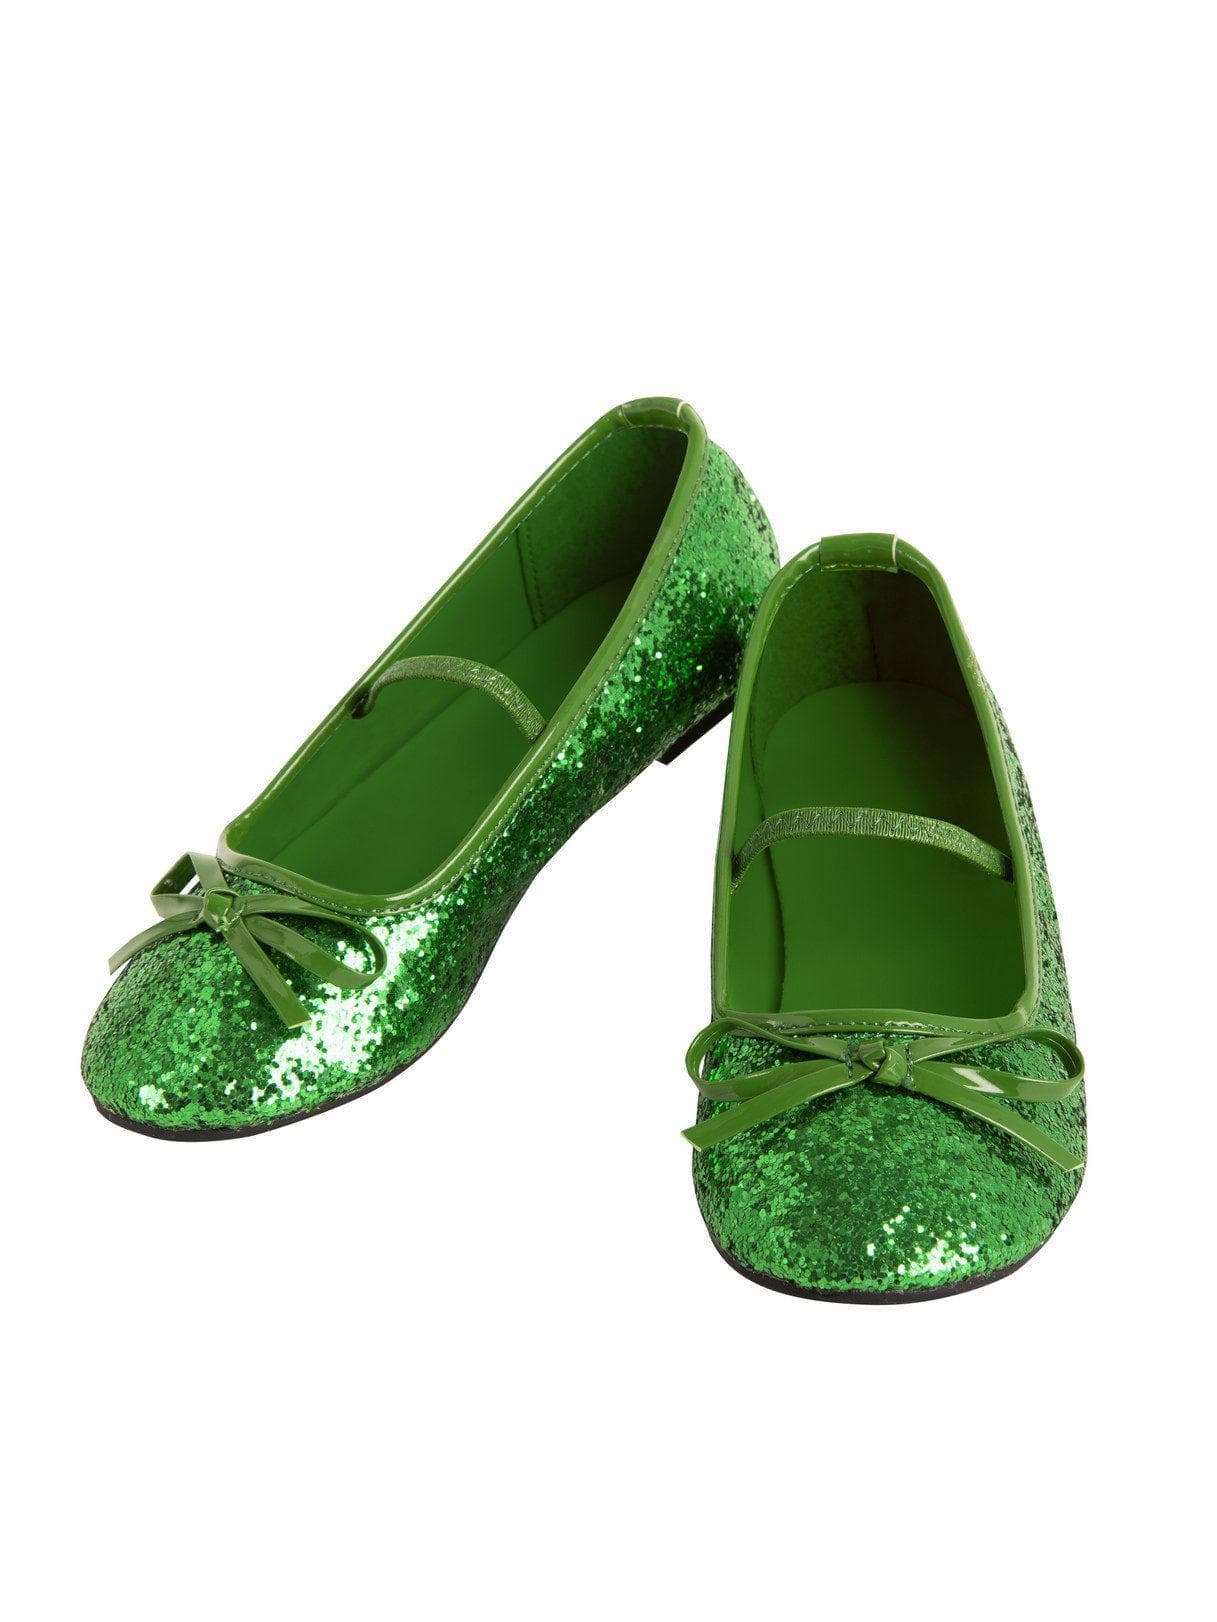 Kids Green Glitter Ballet Shoes - costumes.com